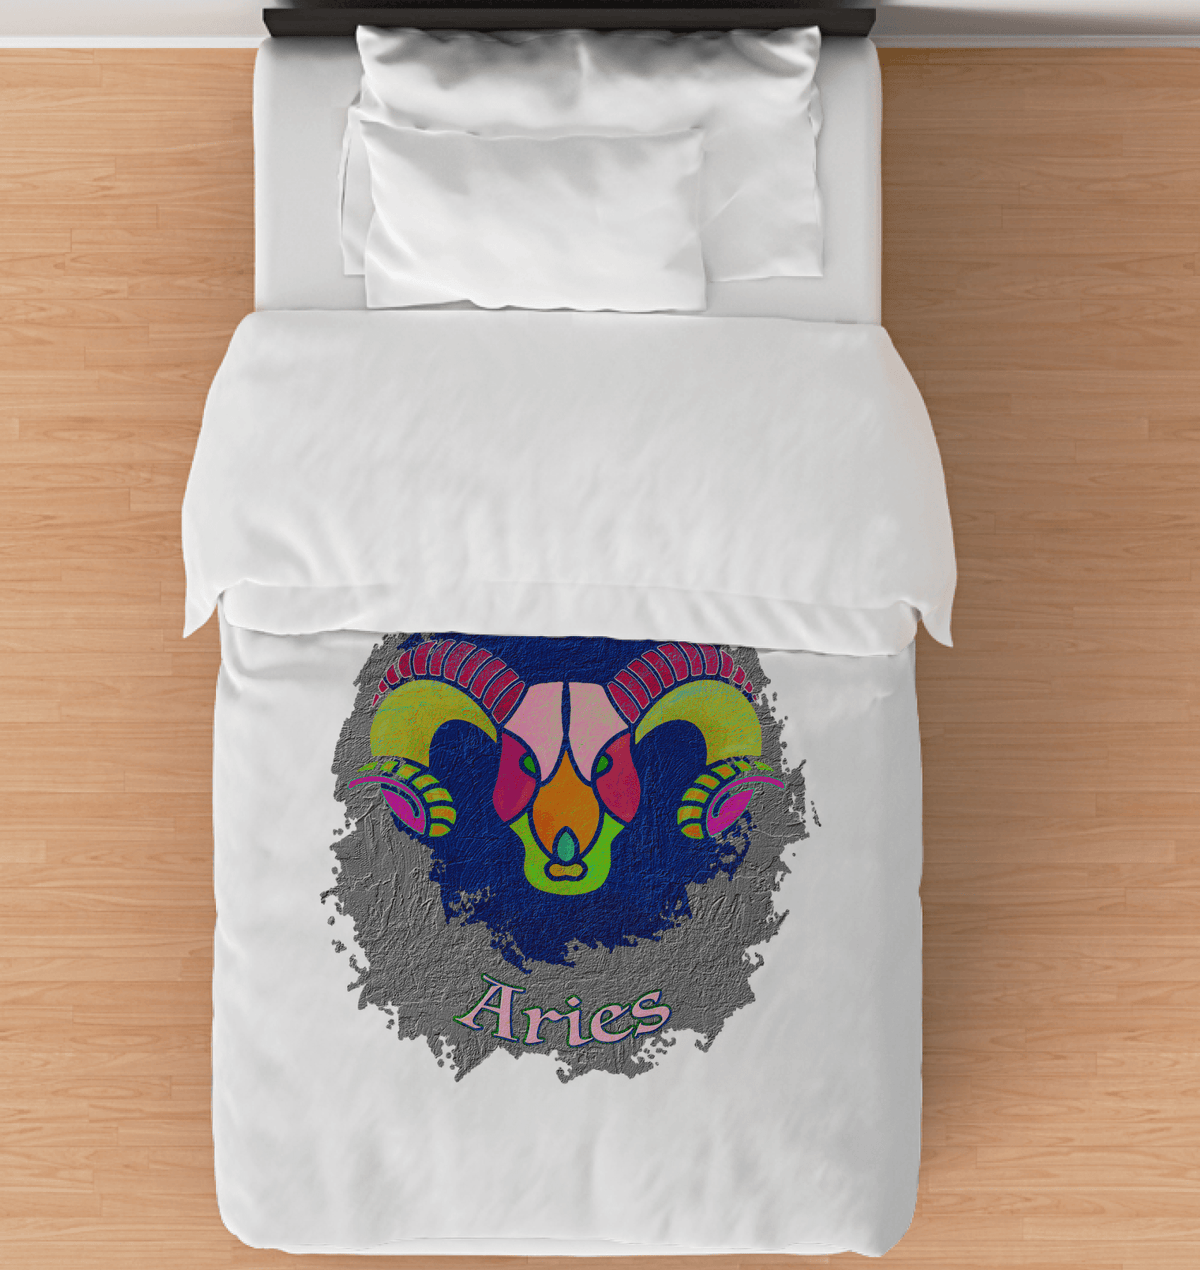 Aries Comforter Twin | Zodiac Series 11 - Beyond T-shirts